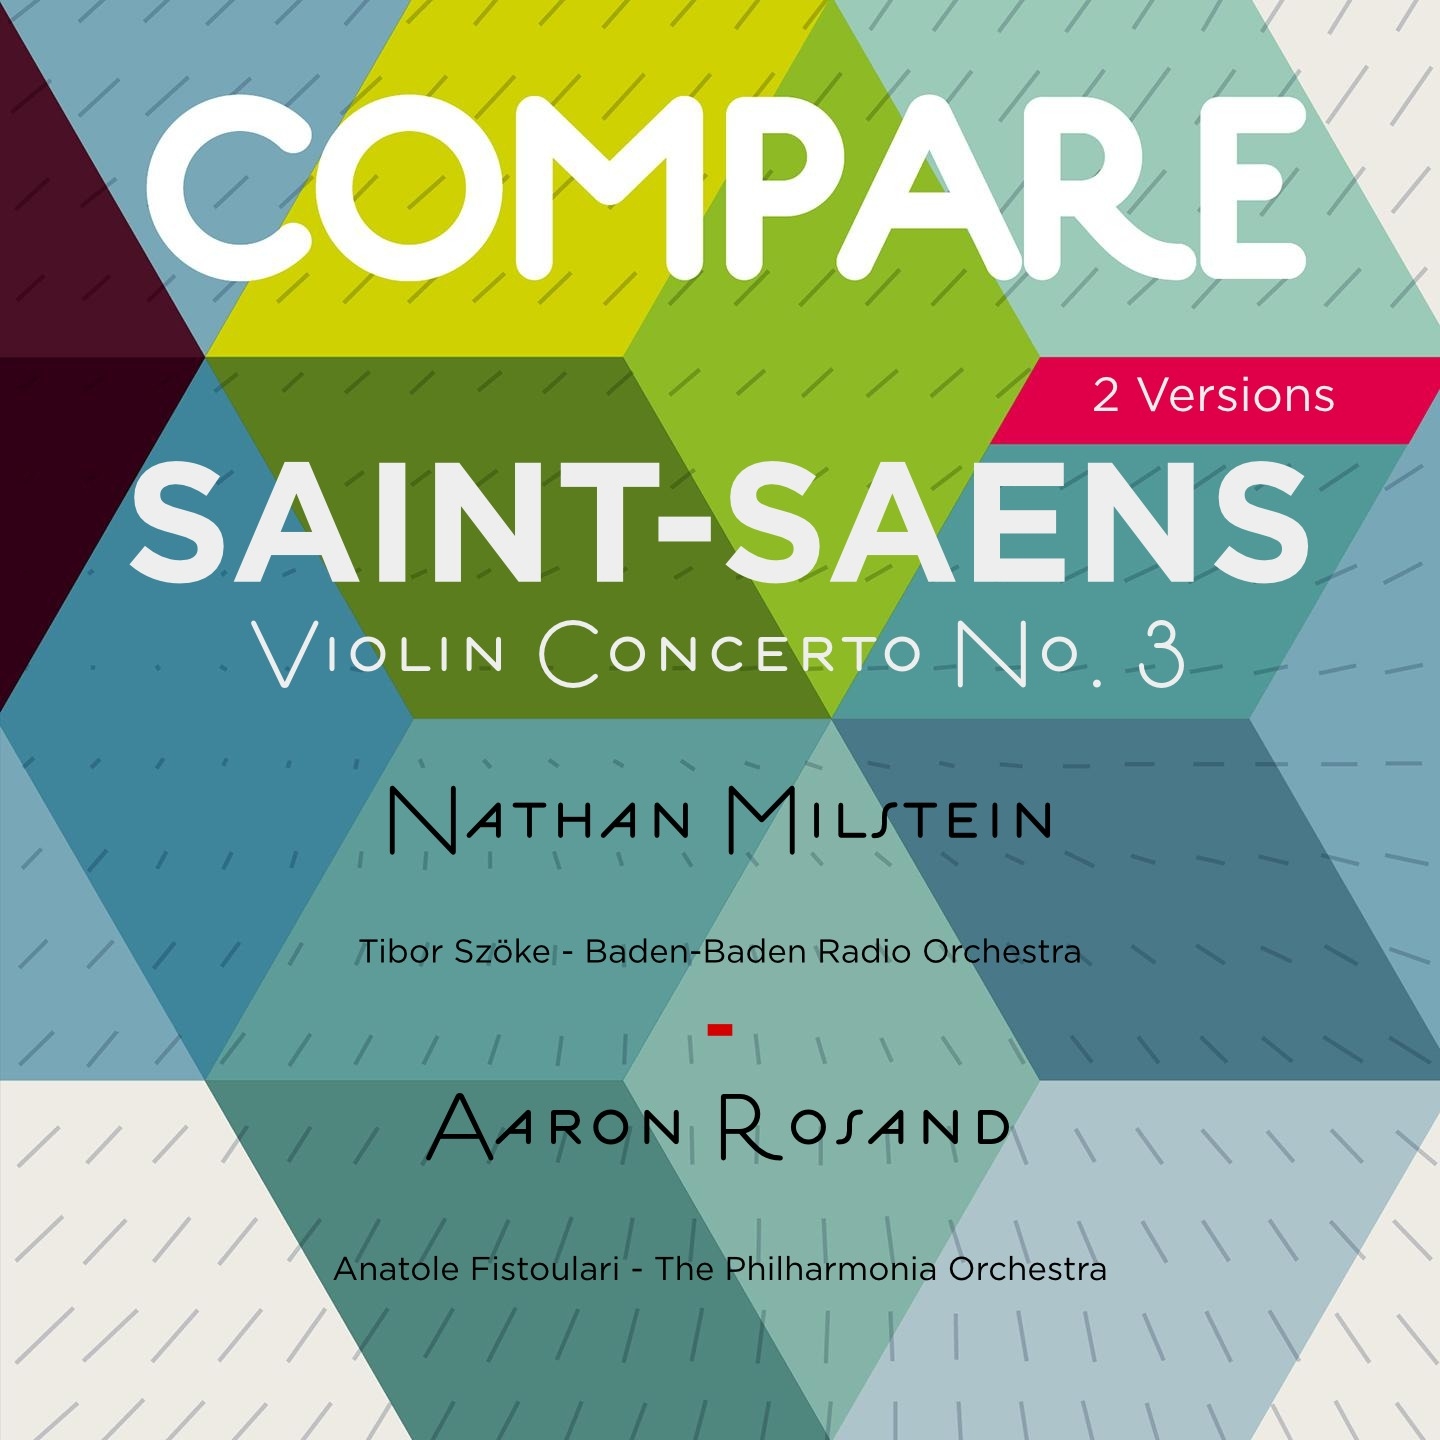 SaintSa ns: Violin Concerto No. 3, Op. 61, Nathan Milstein vs. Aaron Rosand